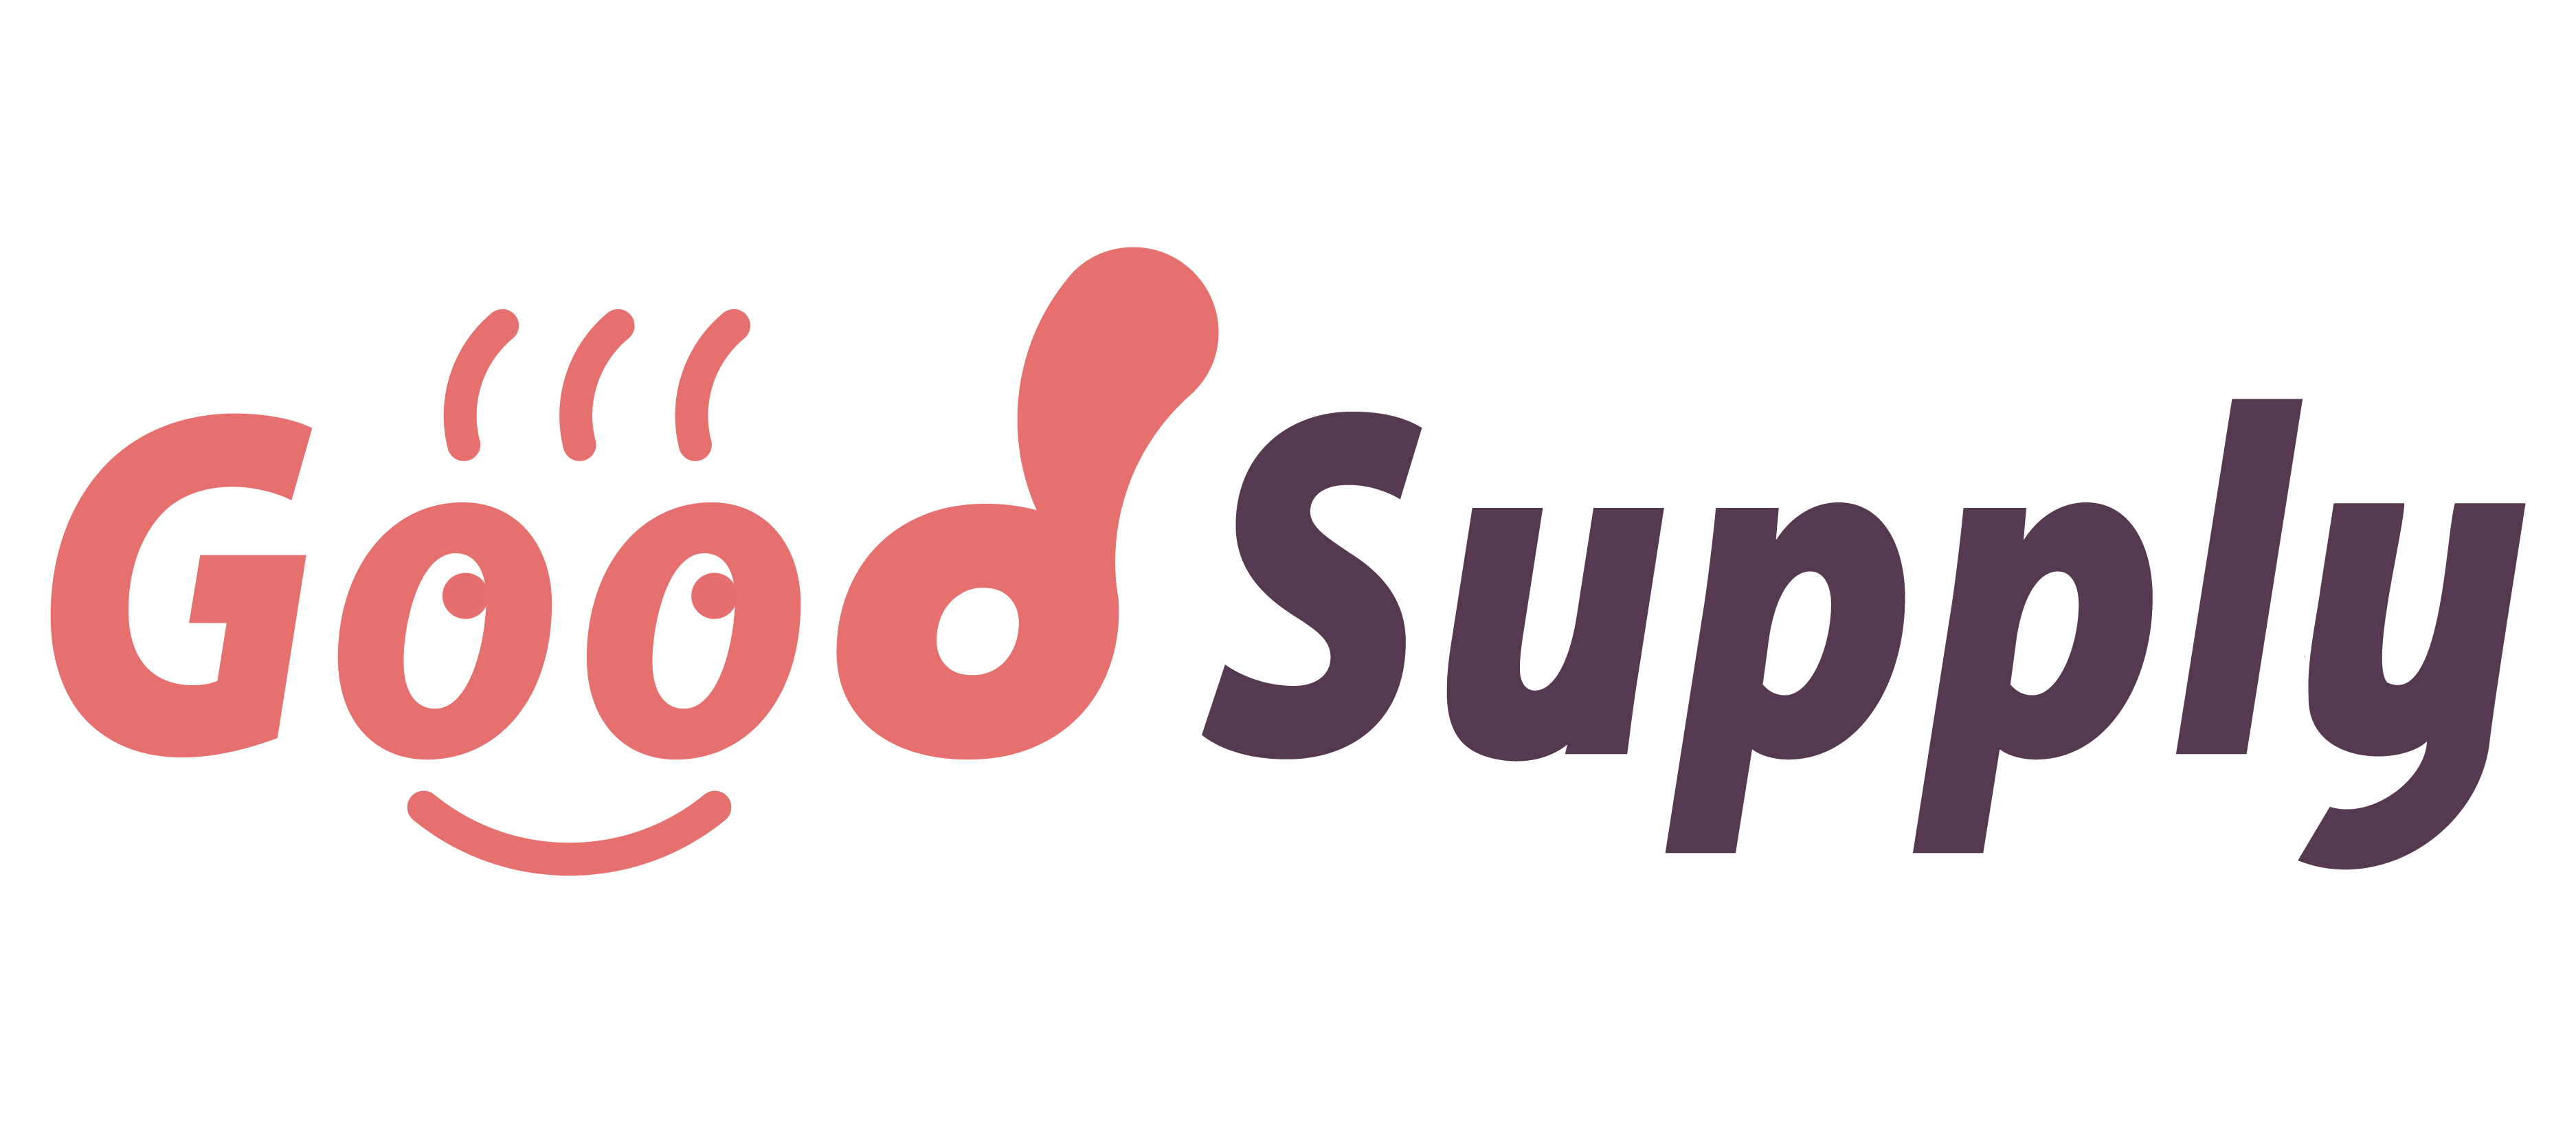 Good Supply